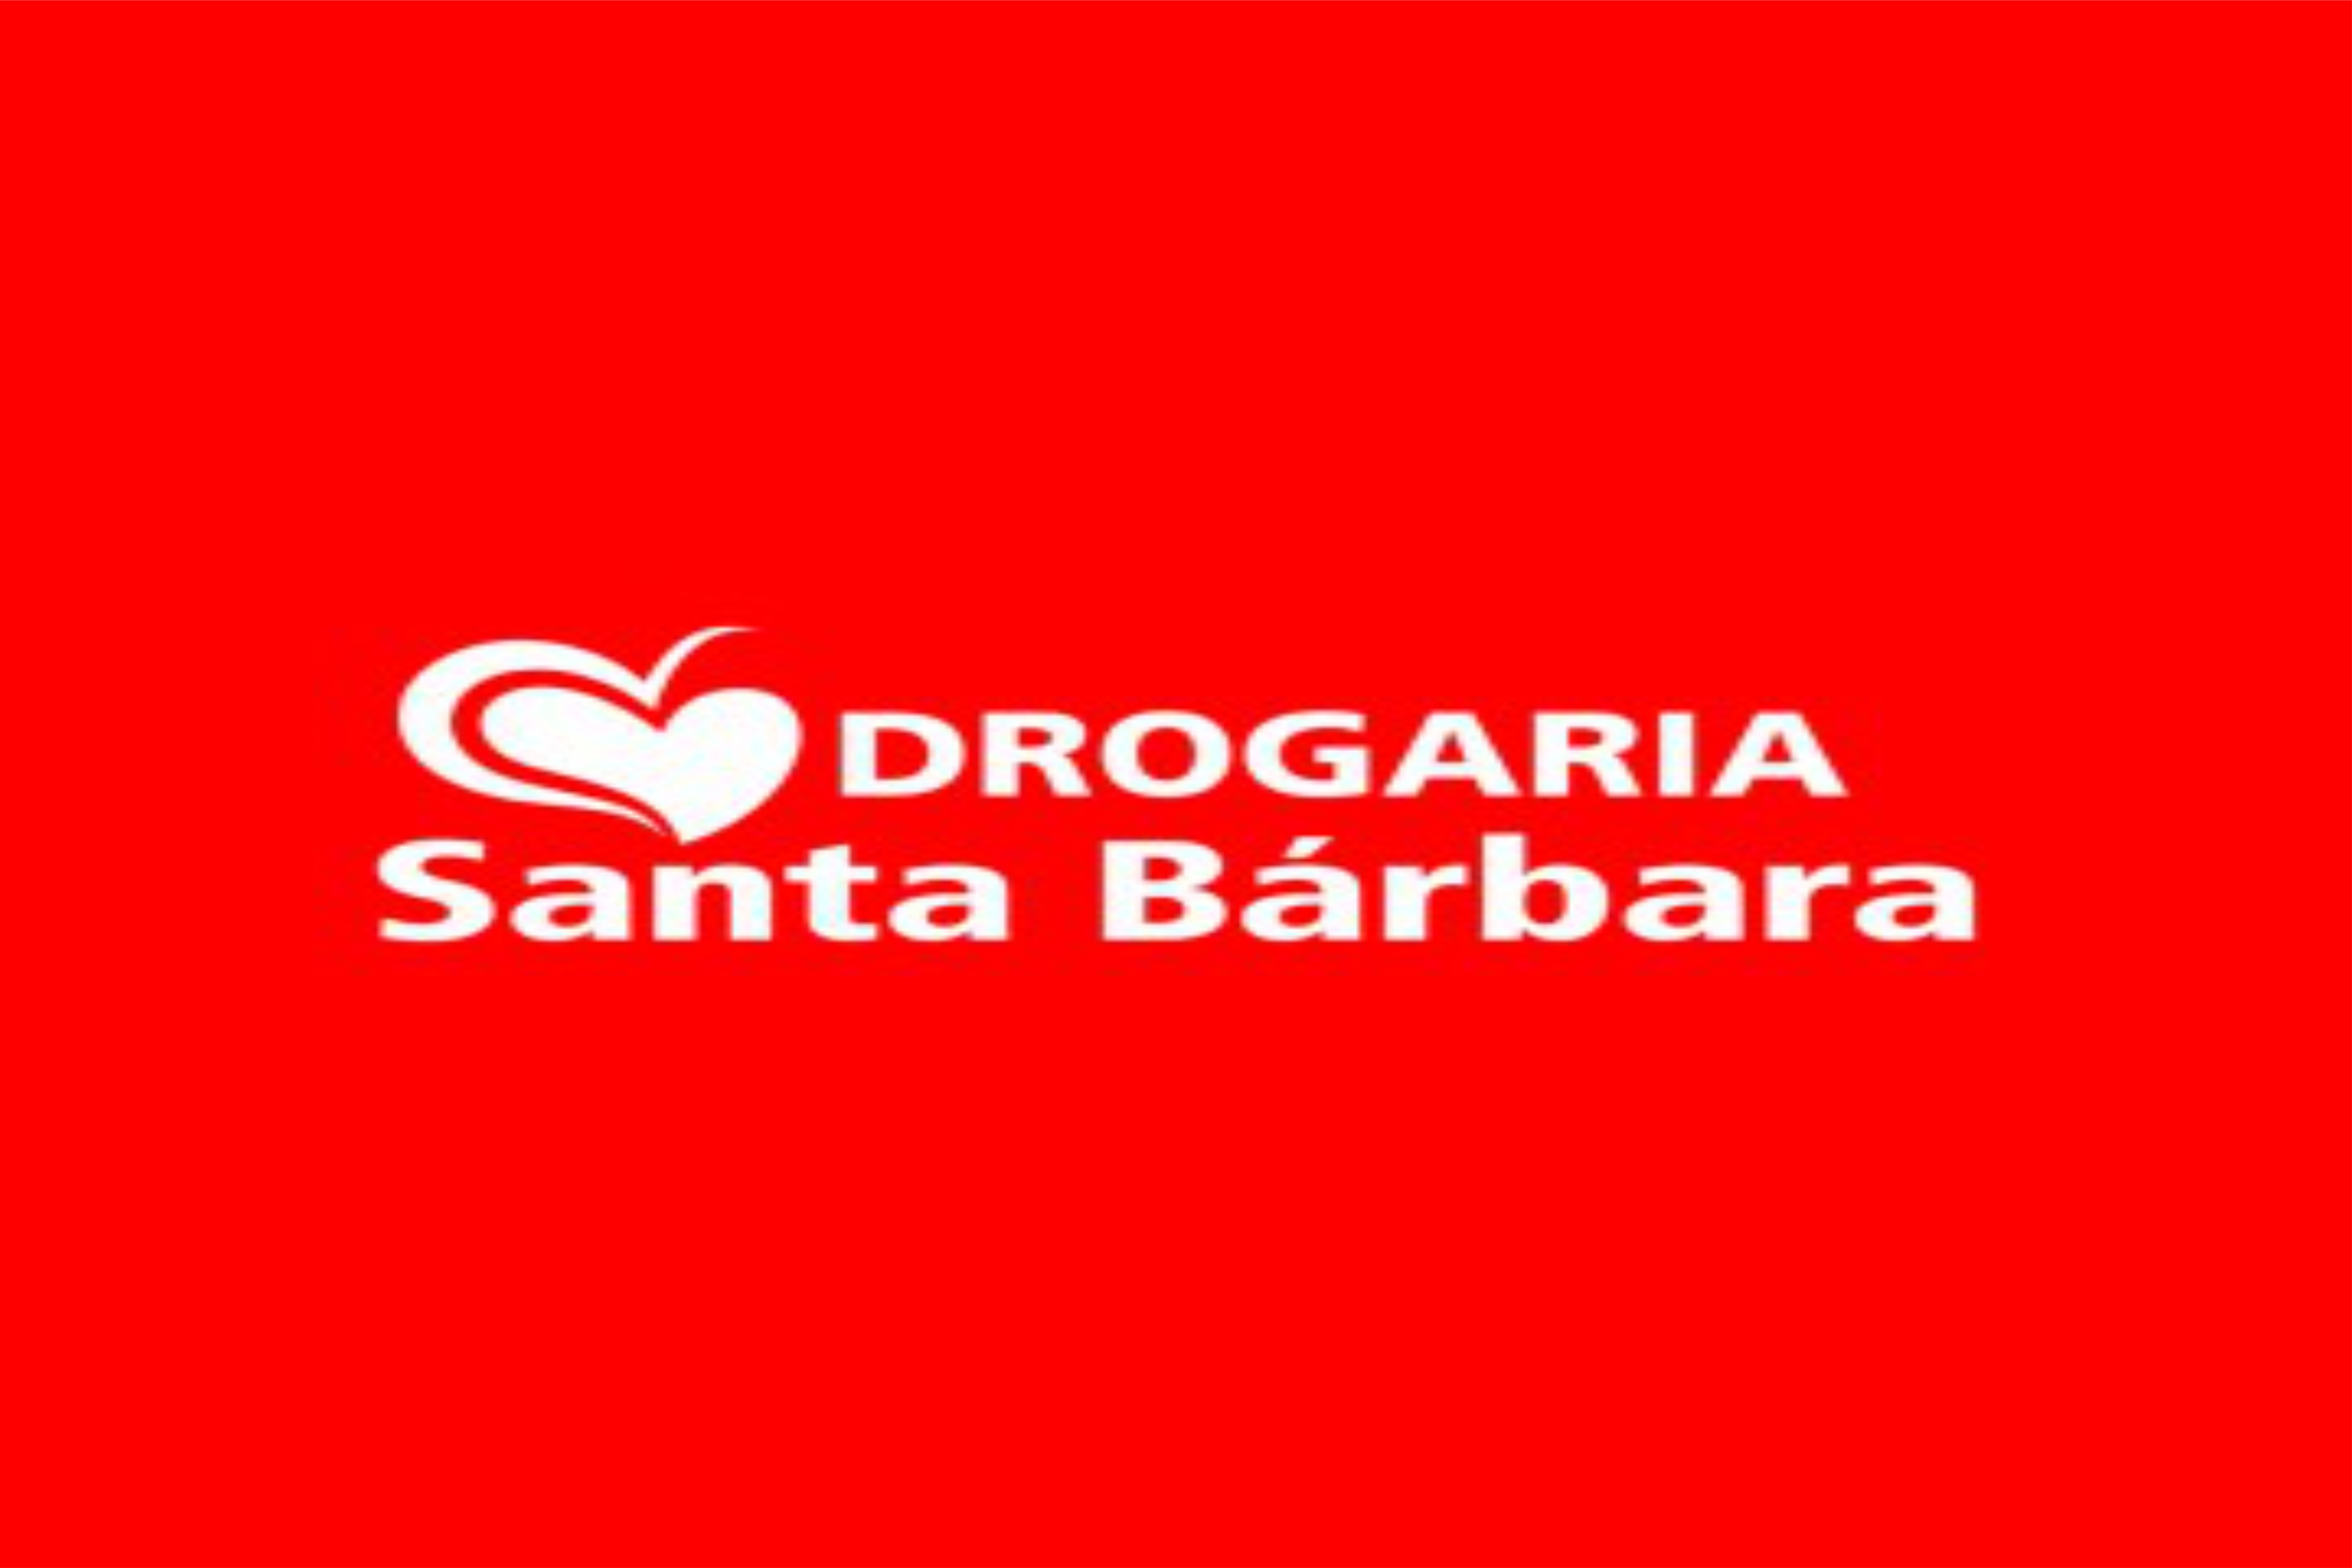 DROGARIA SANTA BÁRBARA - SANTOS DUMONT